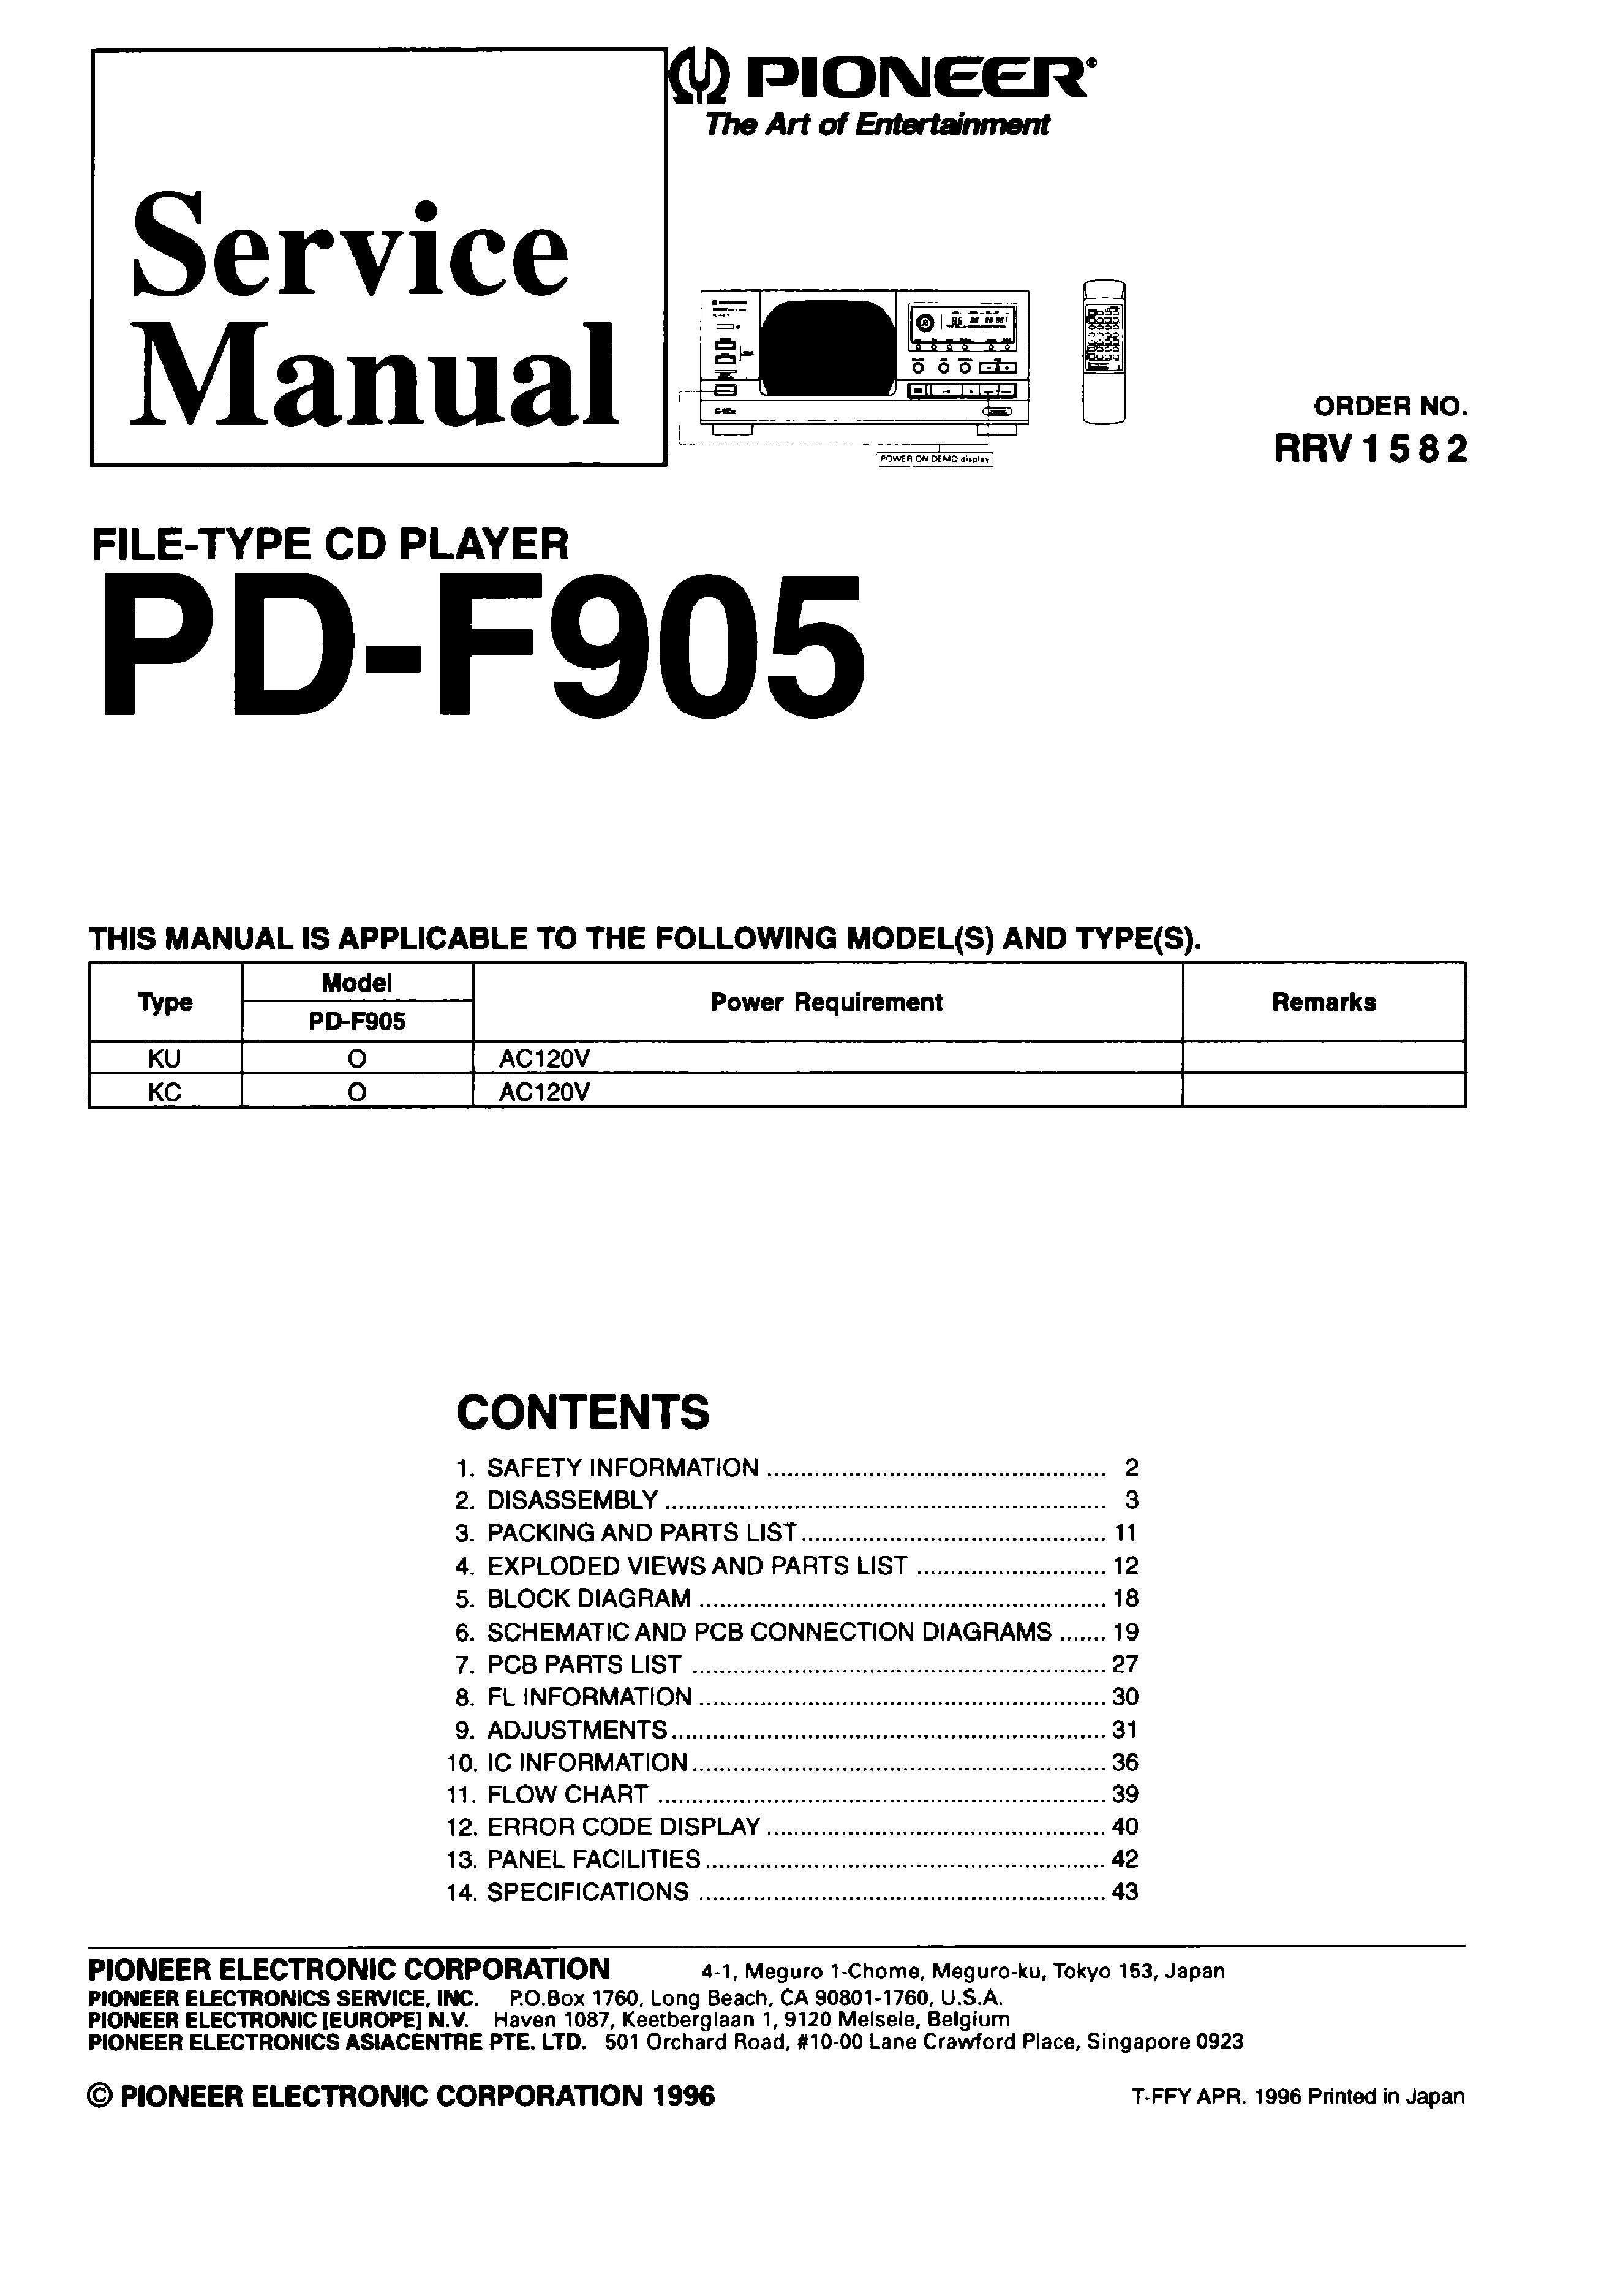 PIONEER CT-40 SERVICE MANUAL Pdf Download | ManualsLib